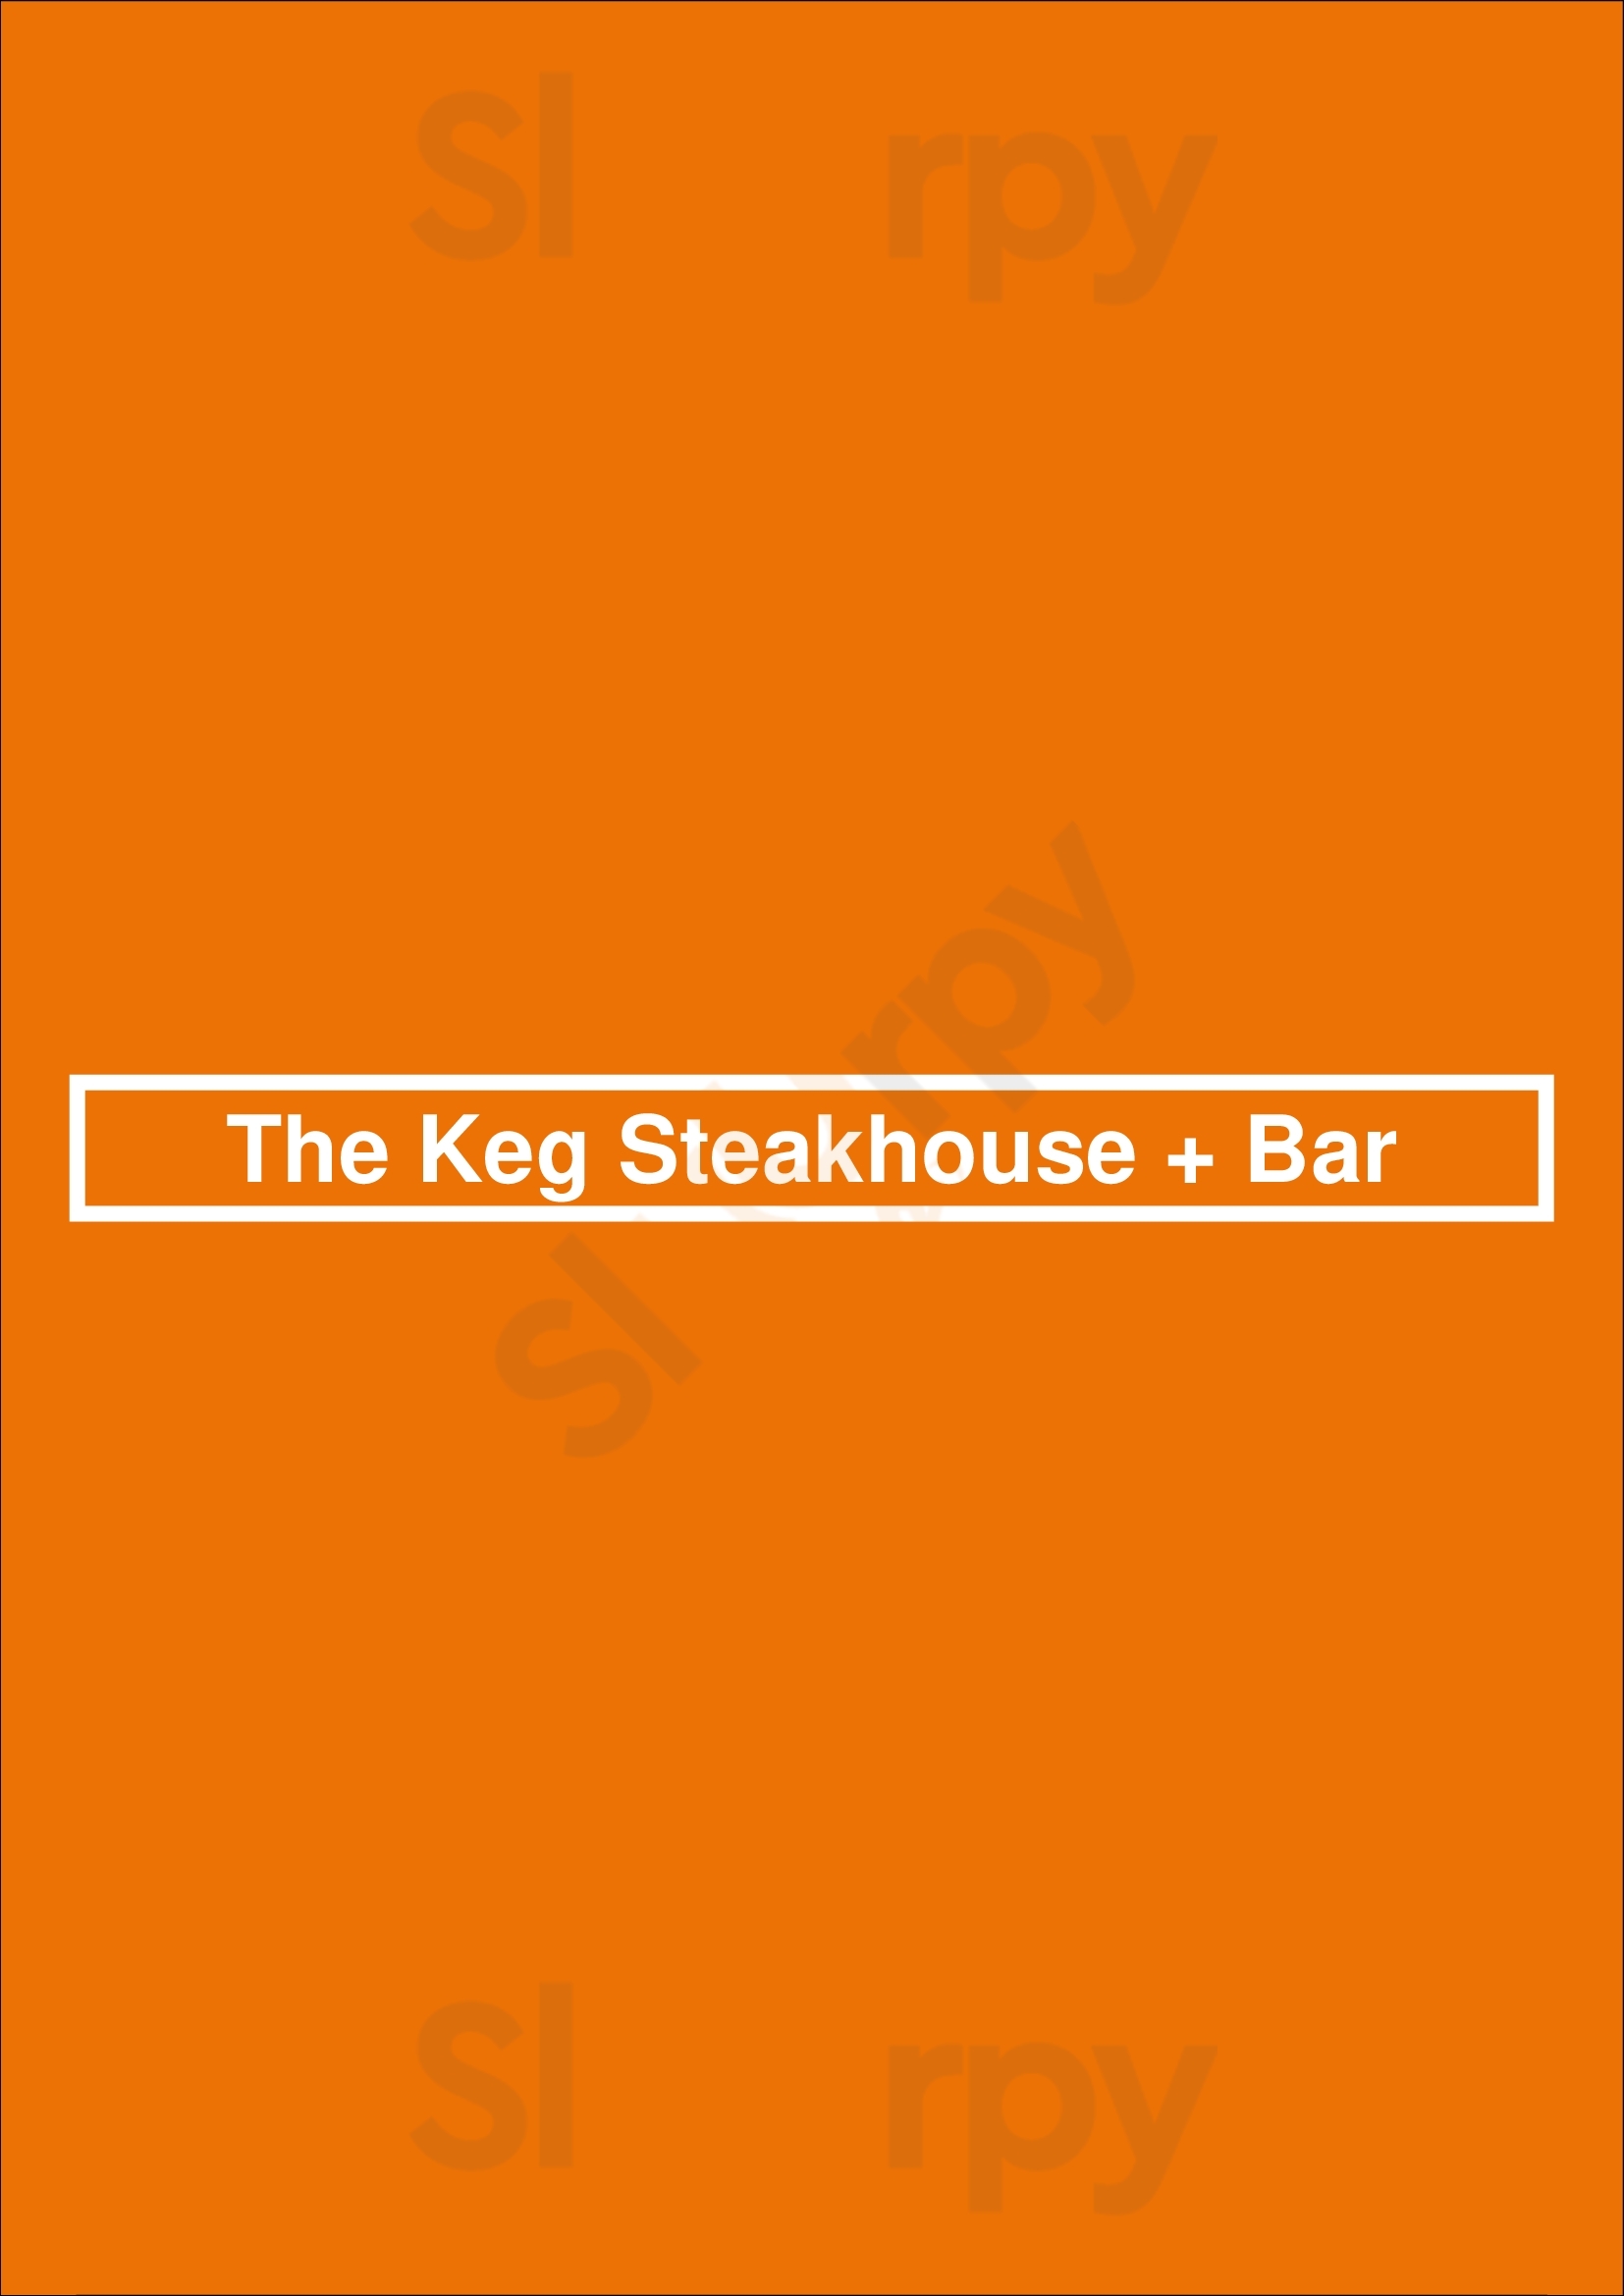 The Keg Steakhouse + Bar - Barrie Barrie Menu - 1